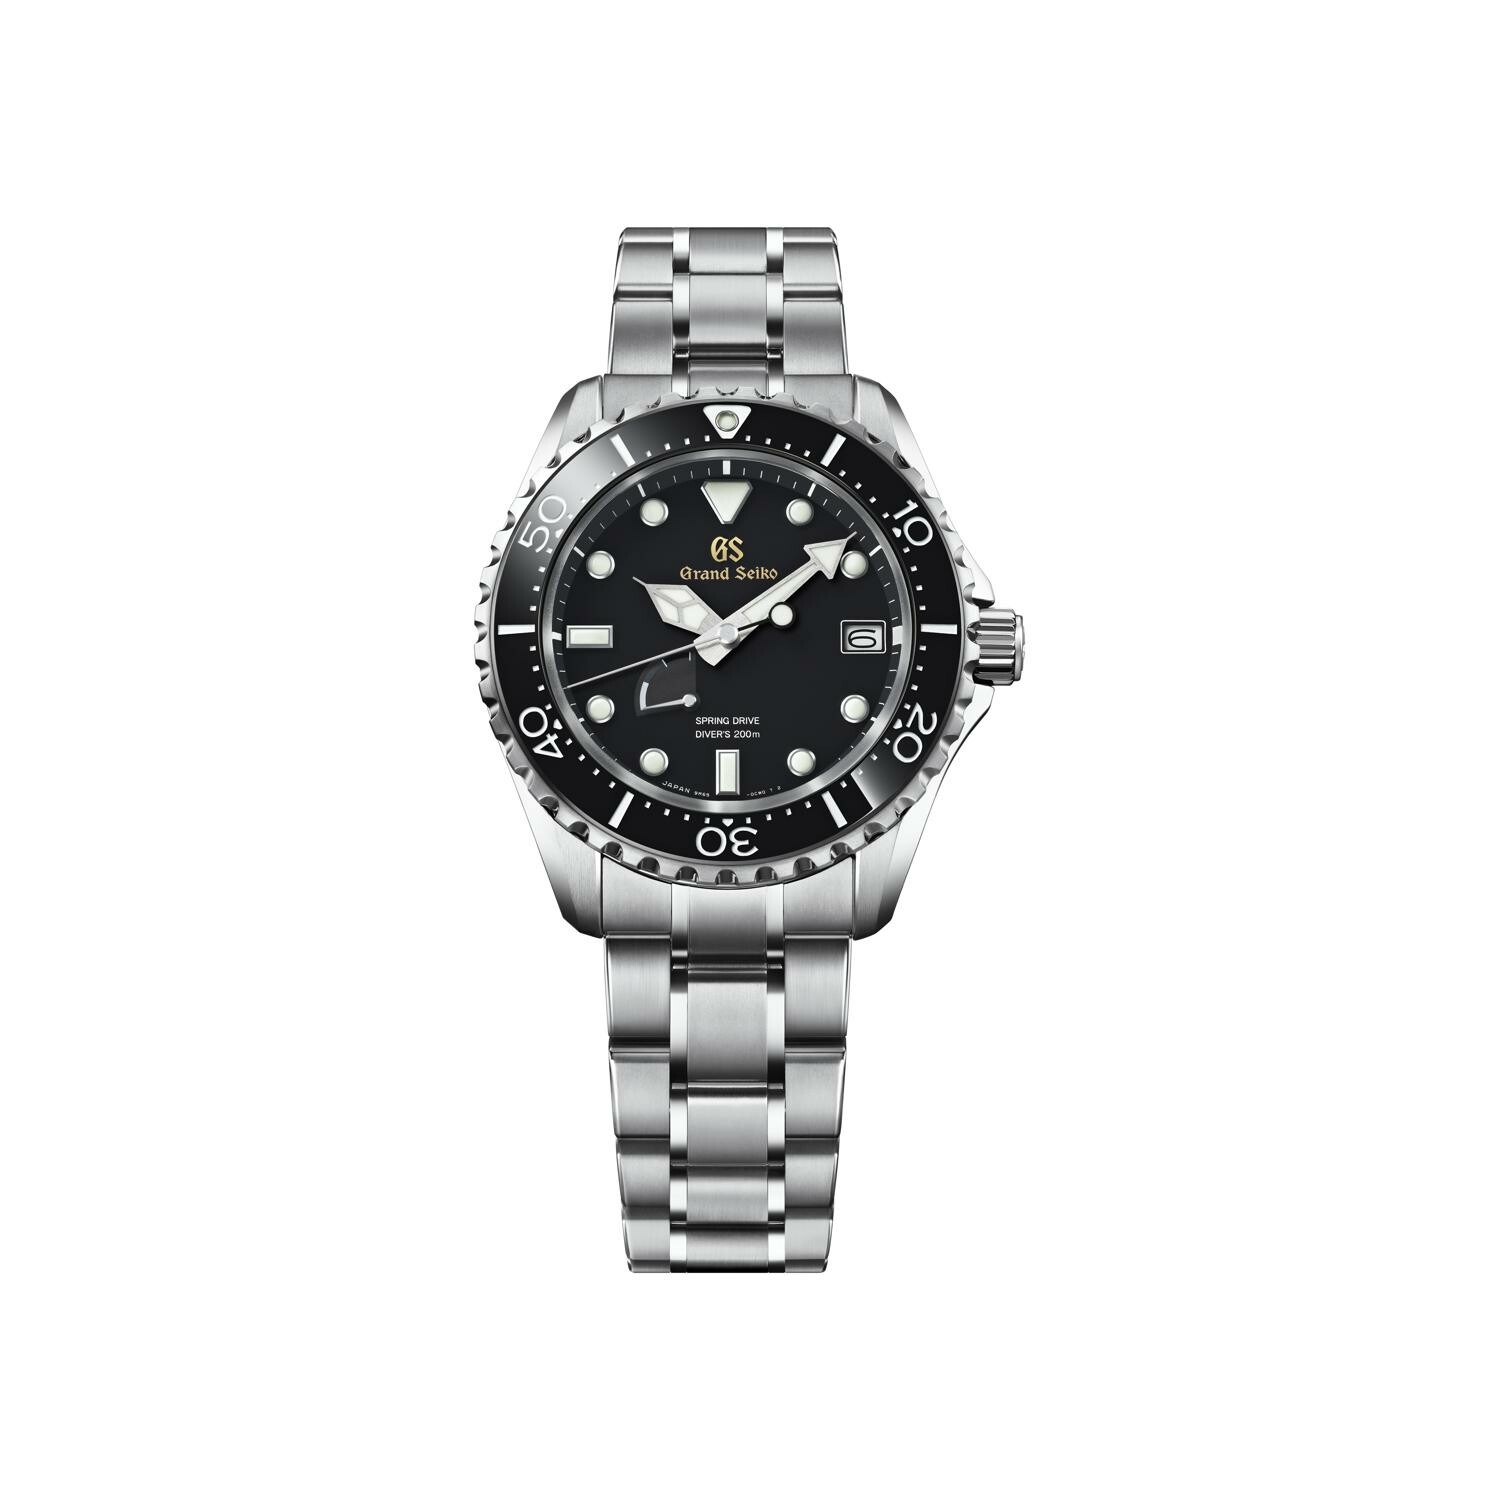 Purchase Grand Seiko Sport SBGA463 watch